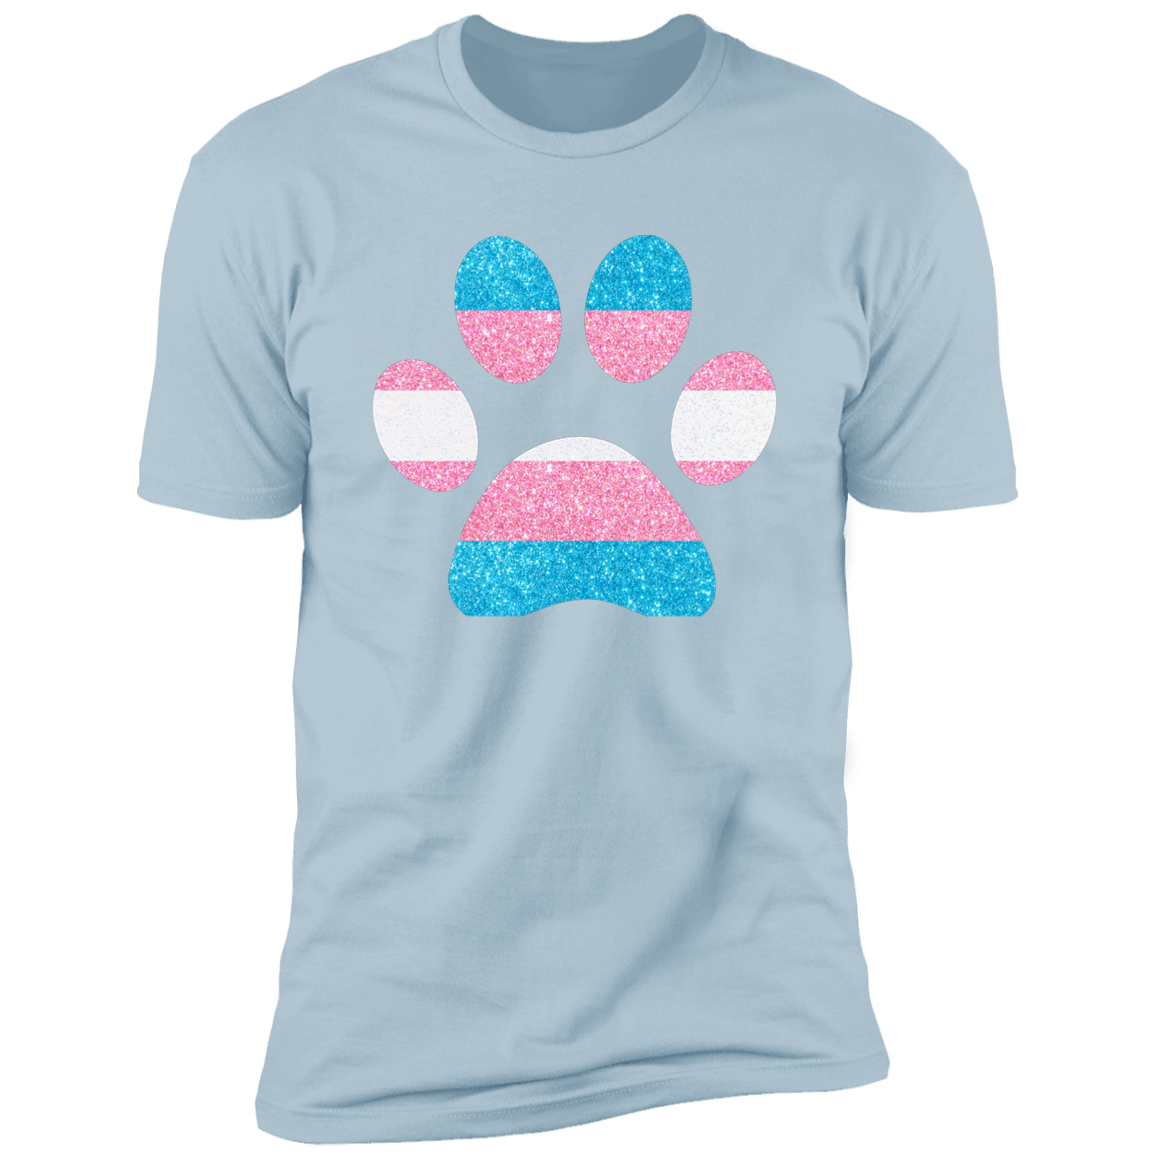 Dog Paw Trans Pride t-shirt, dog trans pride dog shirt for humans, in light blue